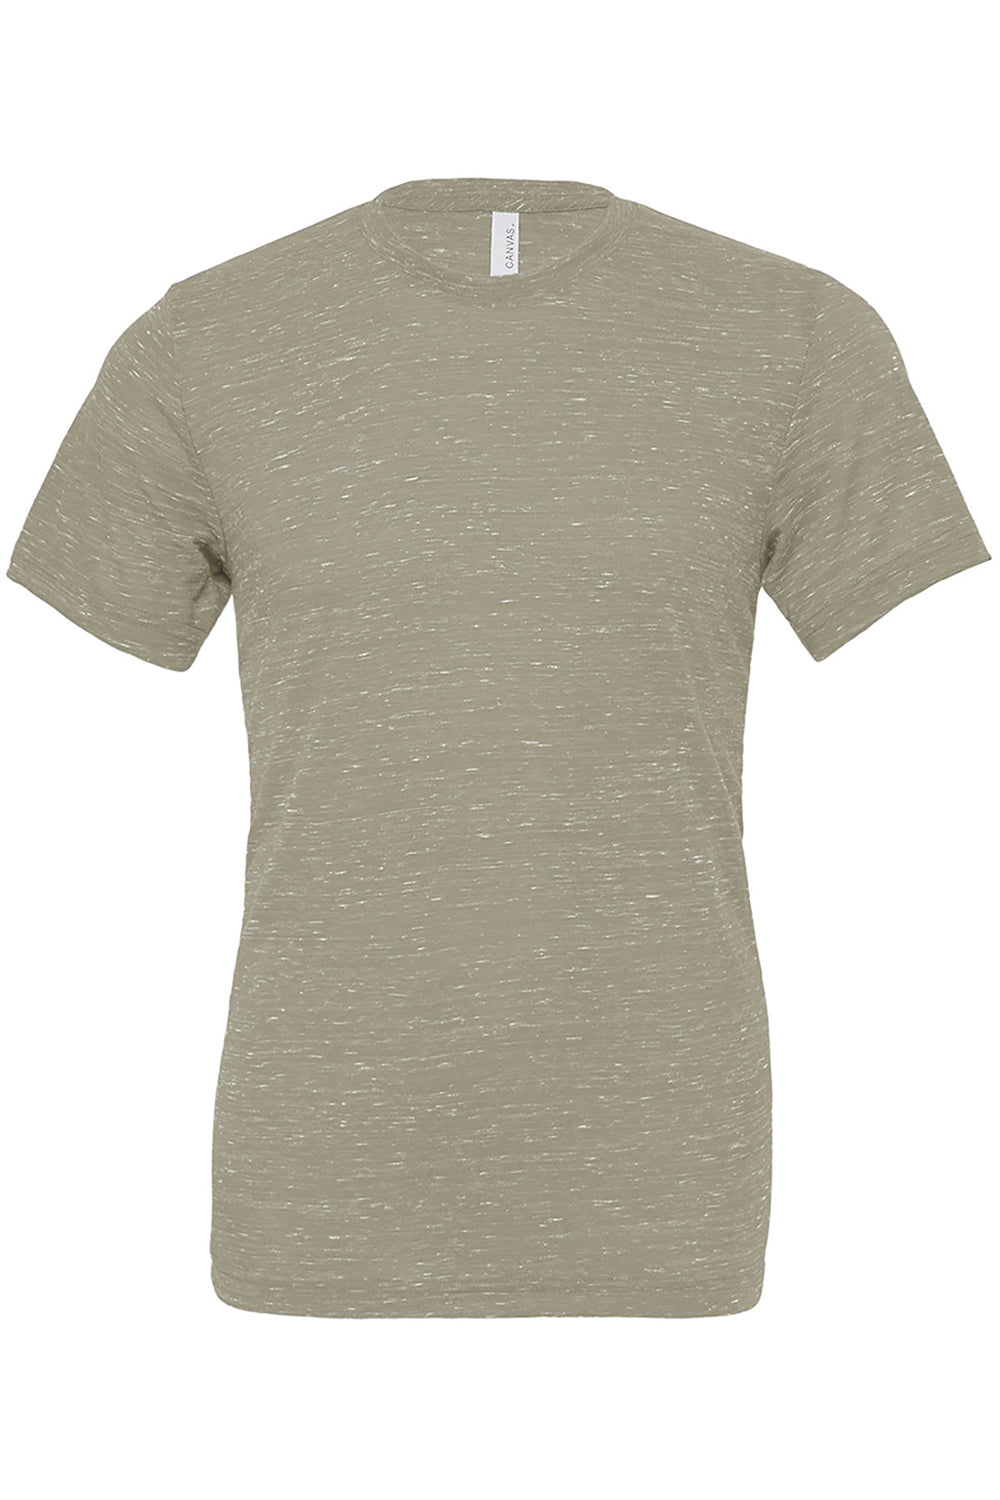 Bella + Canvas BC3650/3650 Mens Short Sleeve Crewneck T-Shirt Stone Marble Flat Front